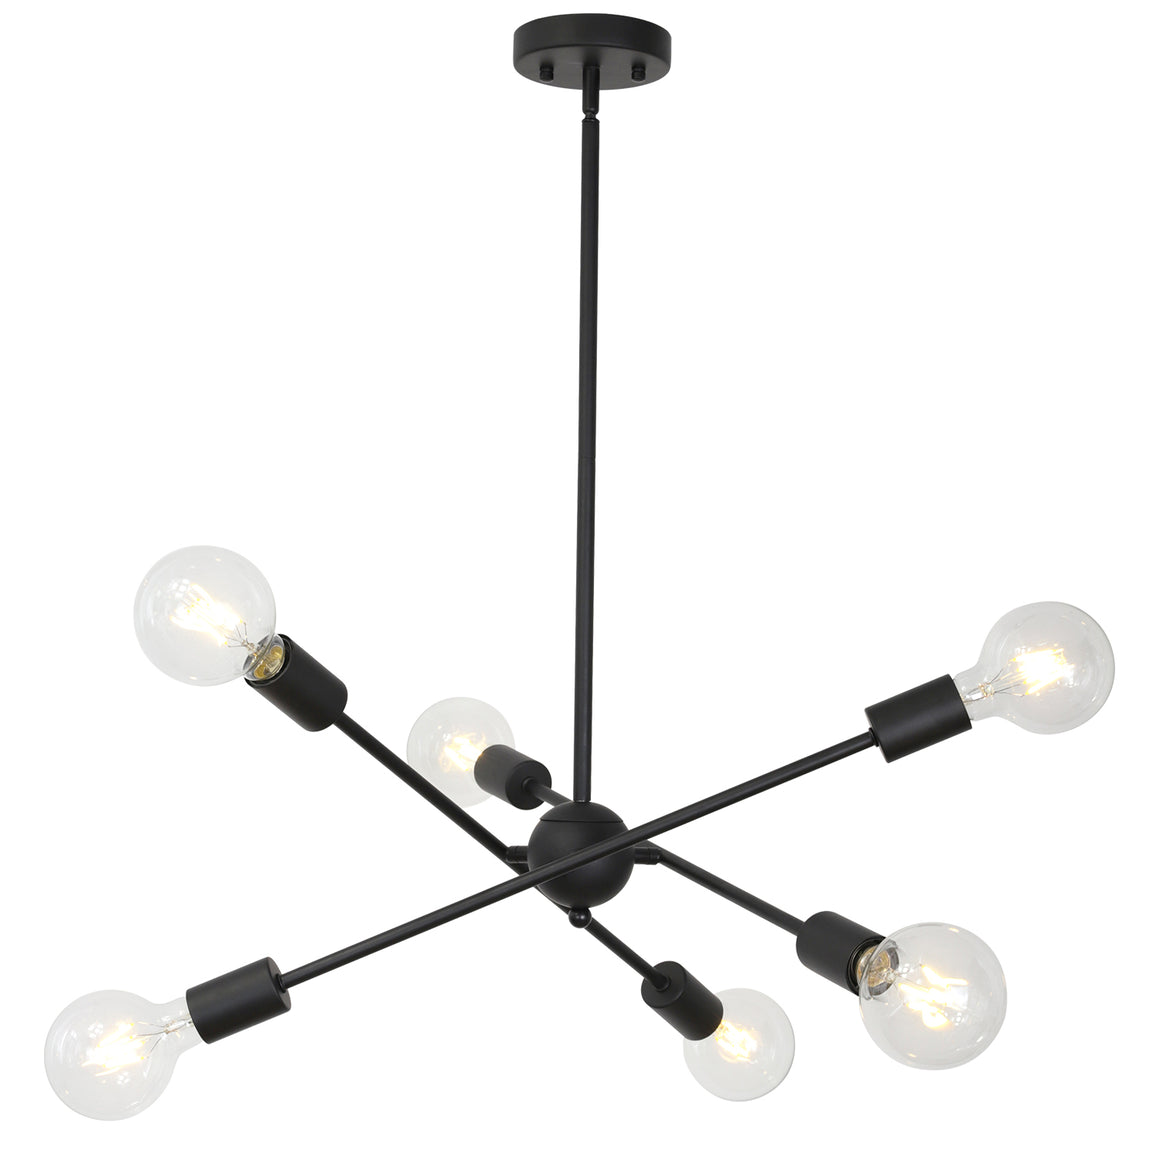 BONLICHT Industrial Sputnik Chandelier Lighting 6 Lights Black Chandelier Mid Century Modern Pendant Light